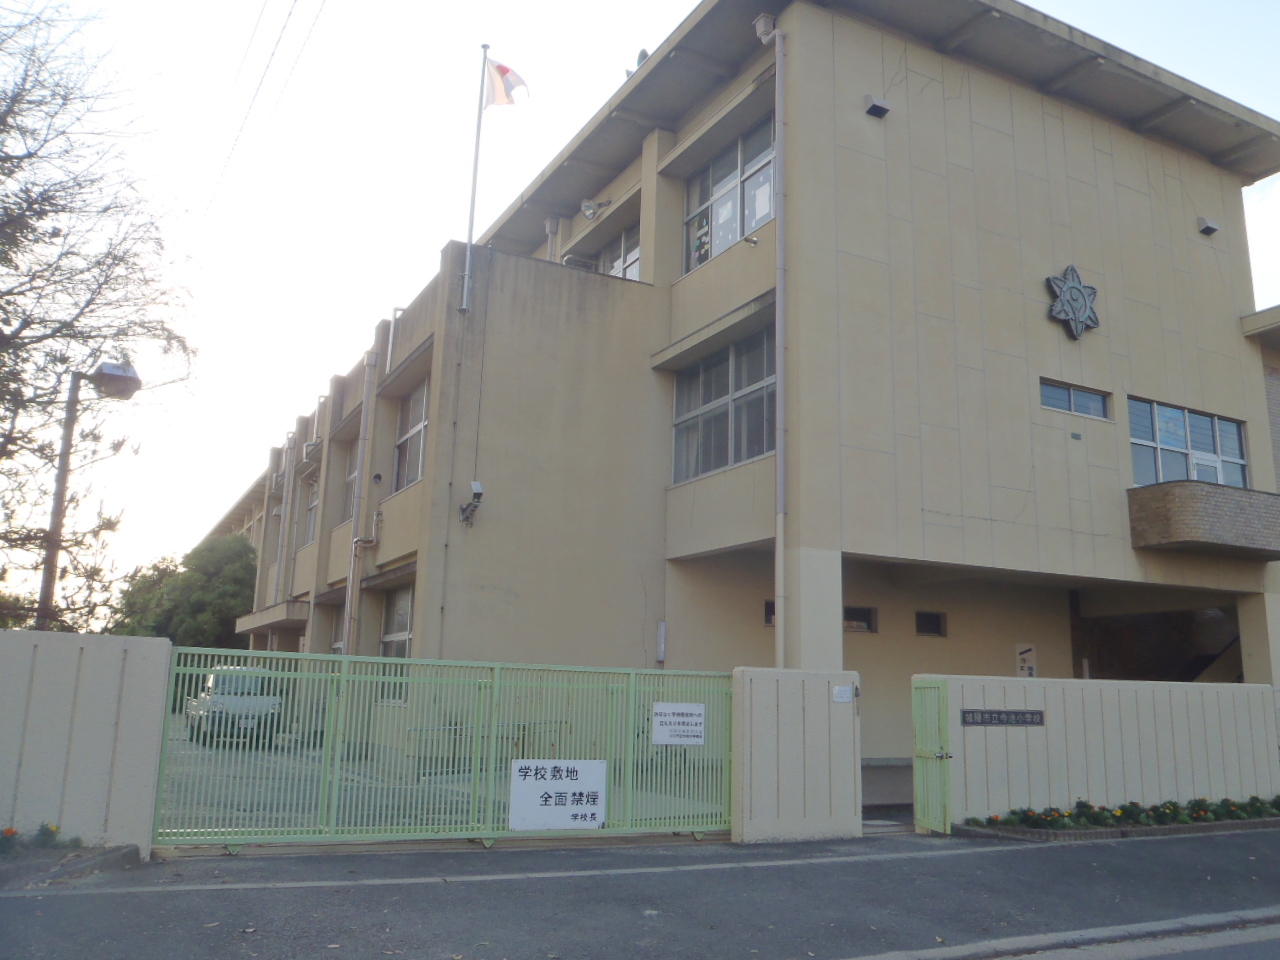 Primary school. 520m to Joyo Municipal Imaike elementary school (elementary school)